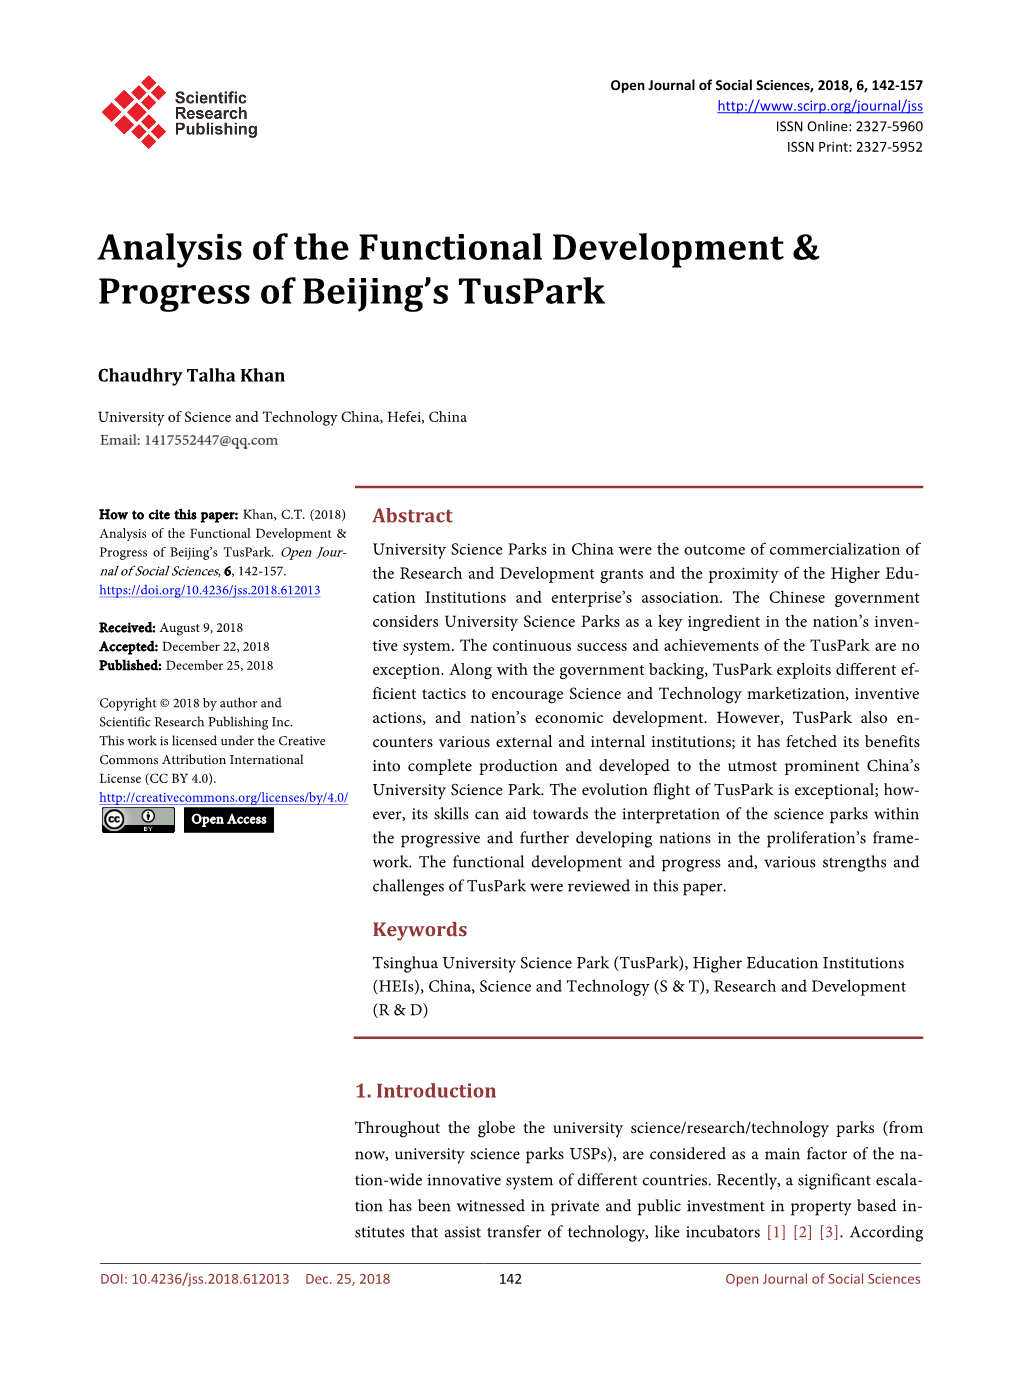 Analysis of the Functional Development & Progress of Beijing's